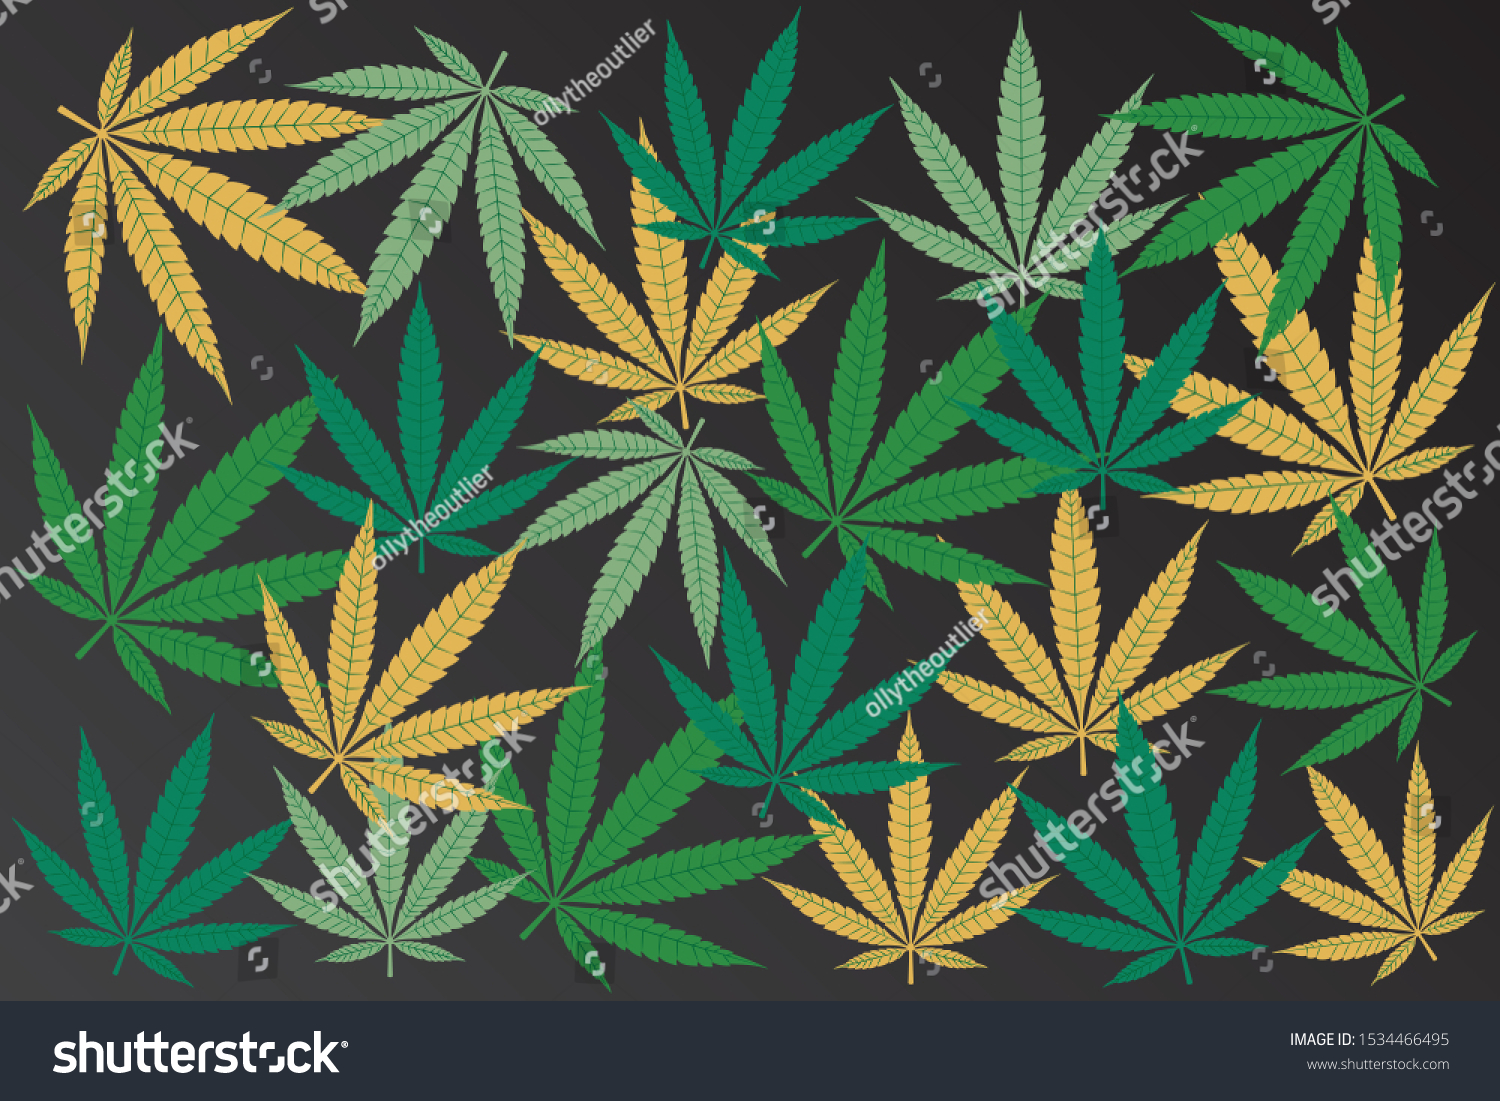 stoner wallpaper weed